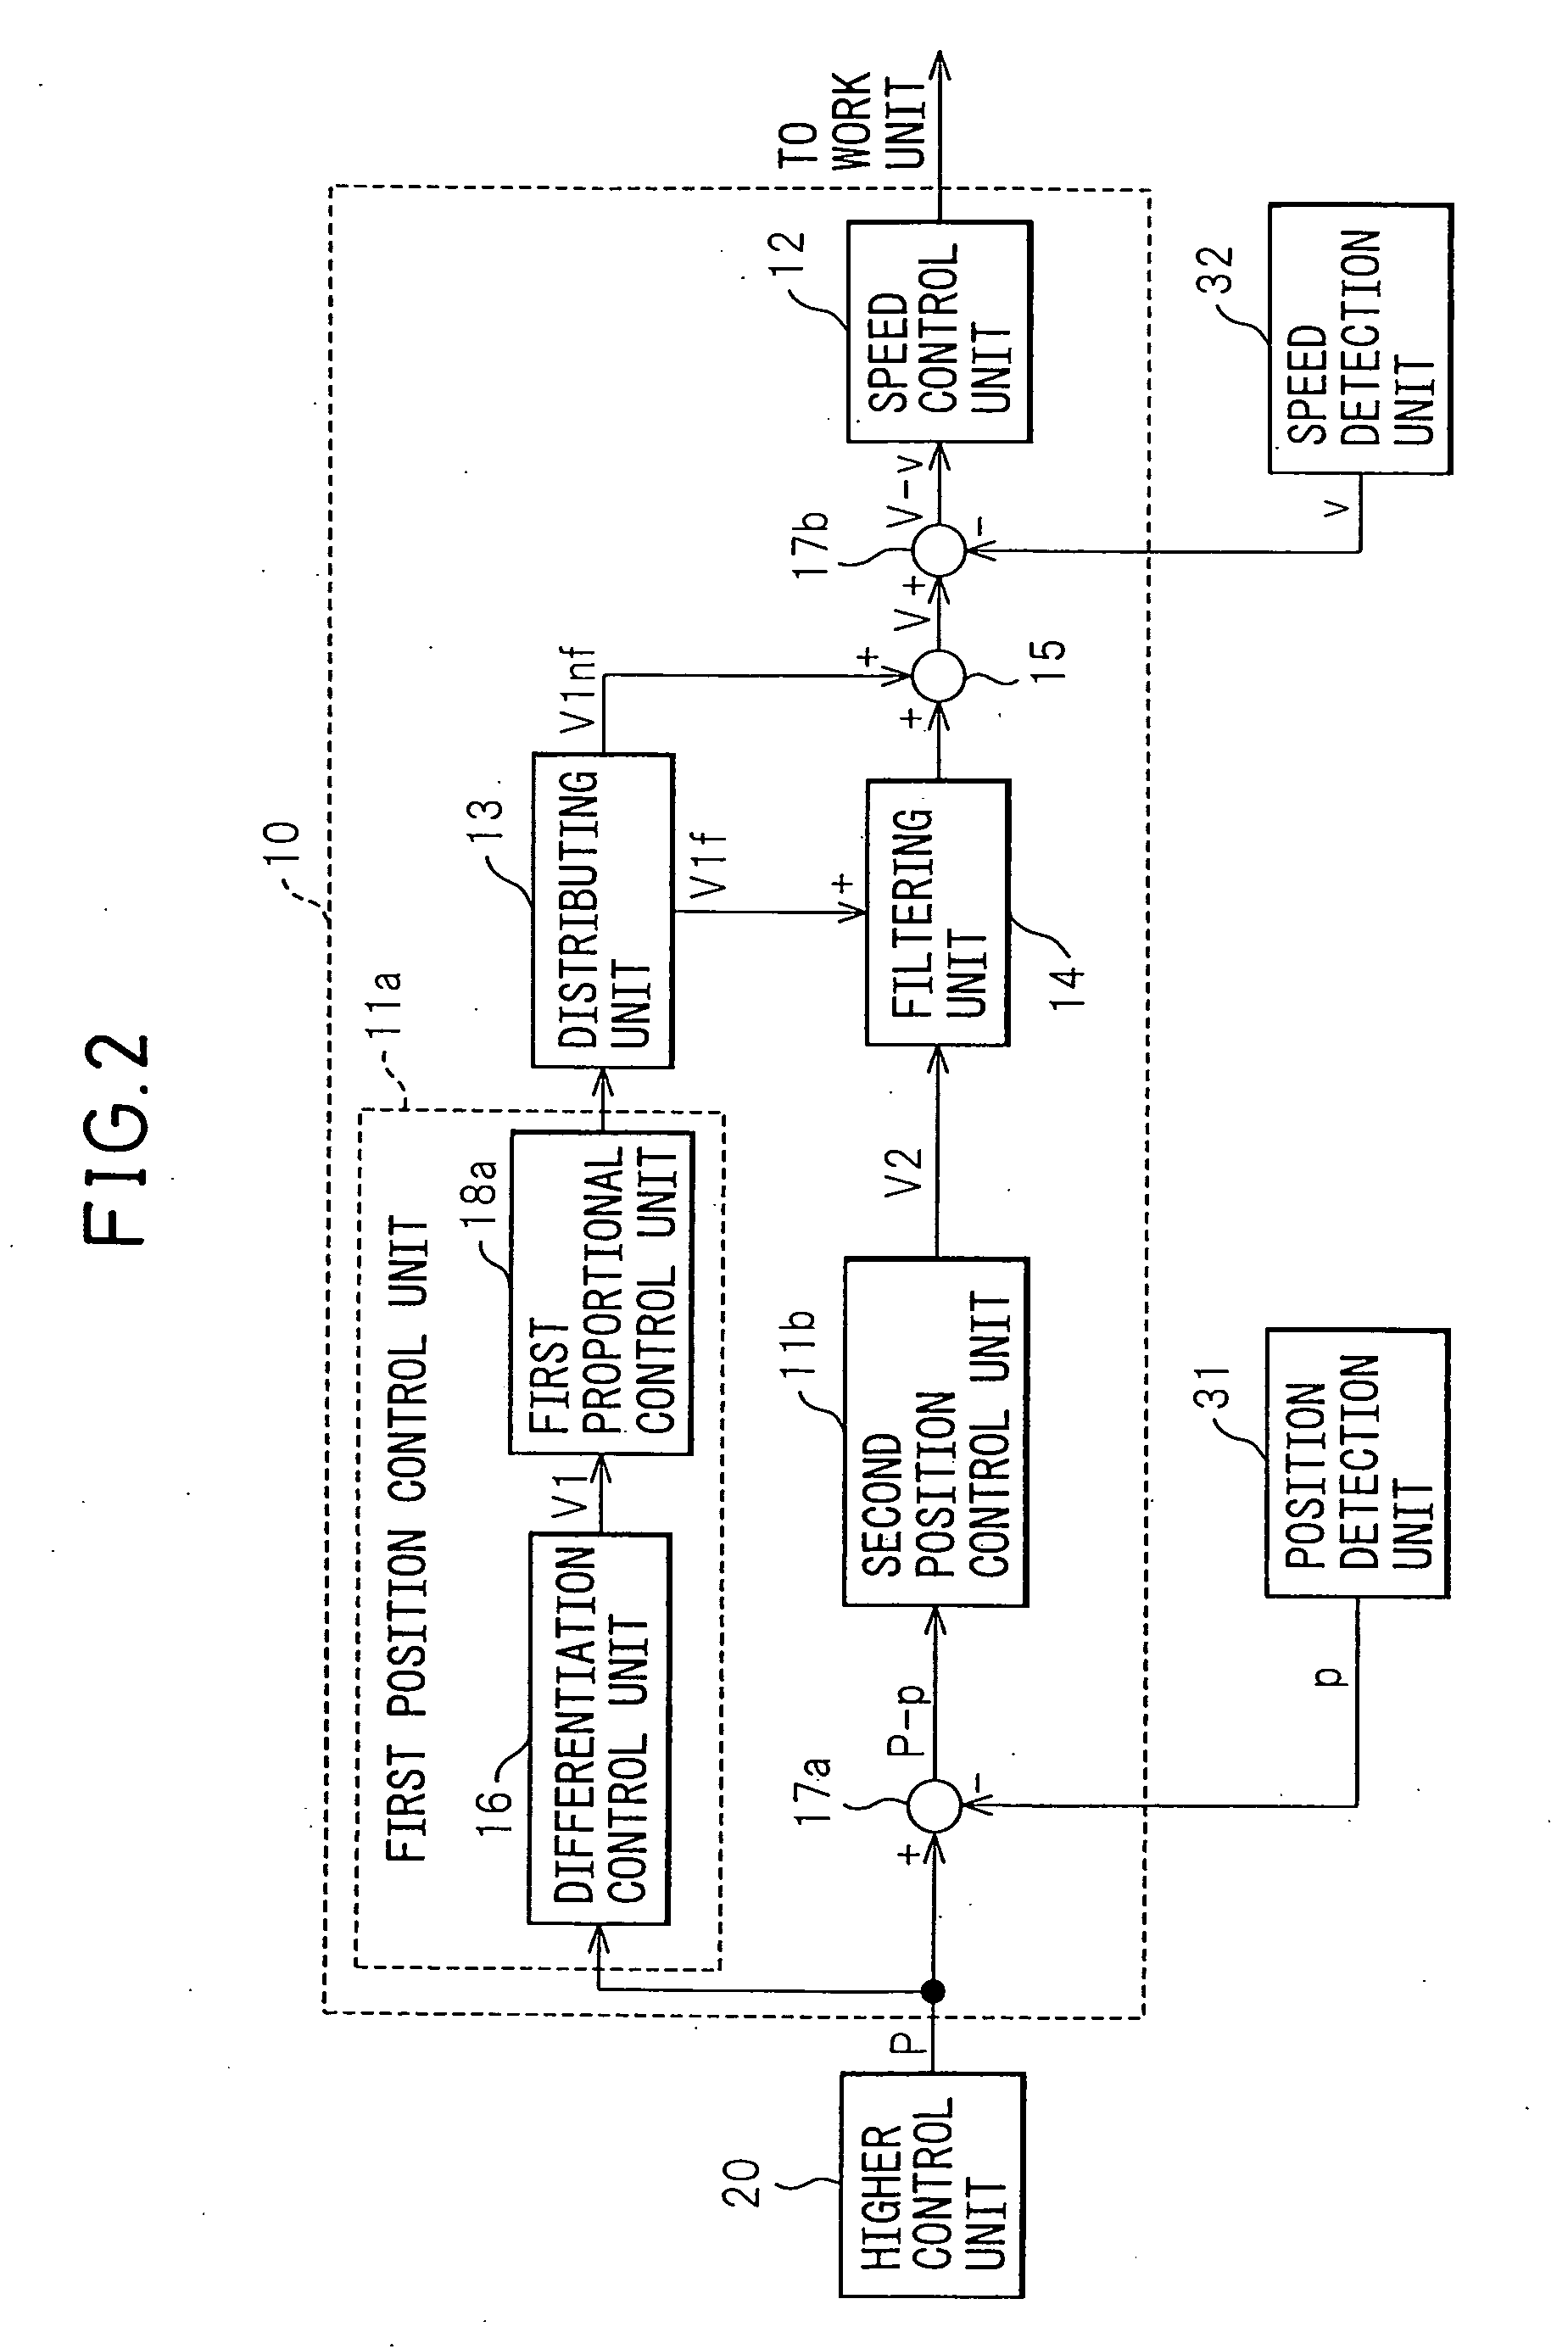 Control apparatus of servo motor